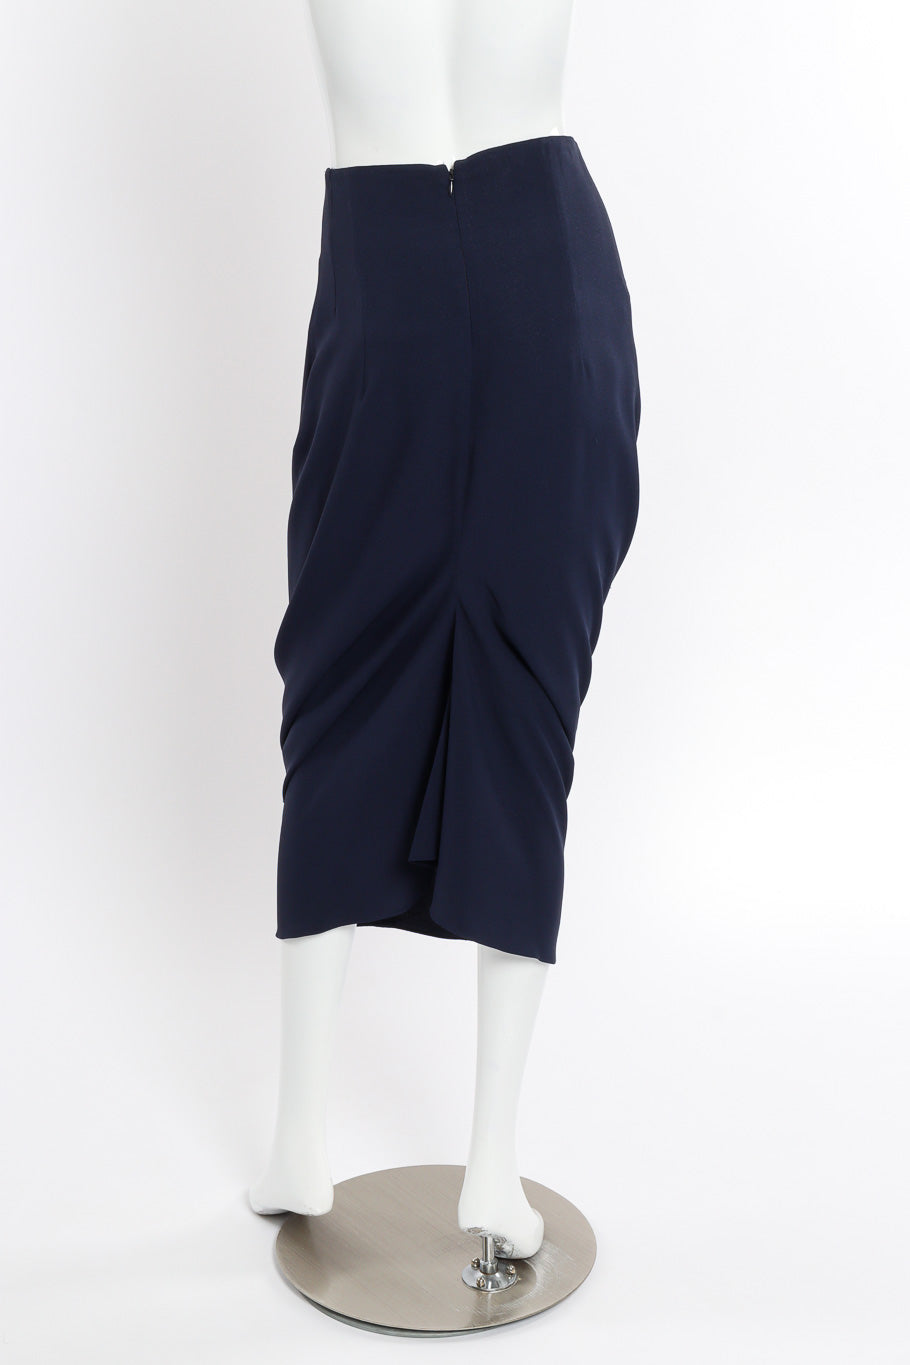 Vintage John Galliano 1999 S/S Draped Jacket and Skirt Set skirt back view on mannequin @recessla